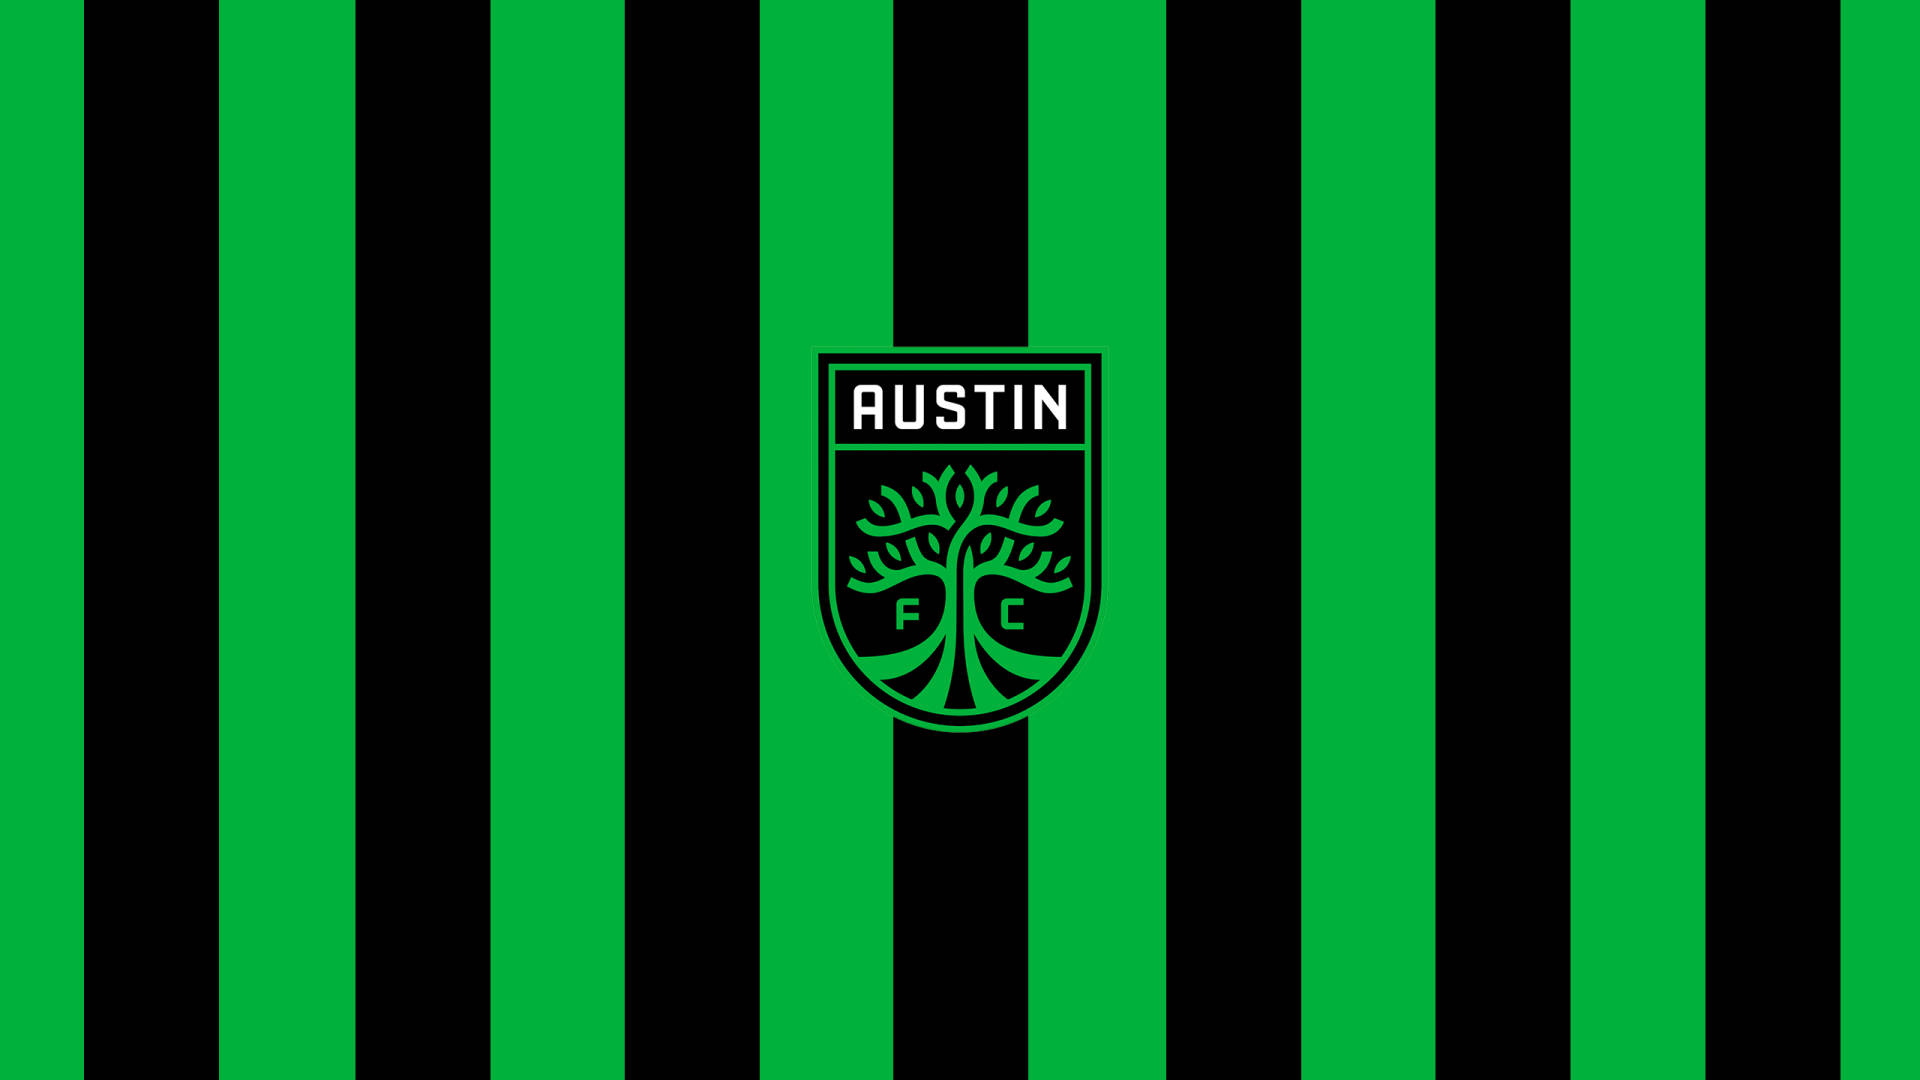 Austinfc Fotbollsklubbens Logotyp I Grönt Mönster. Wallpaper